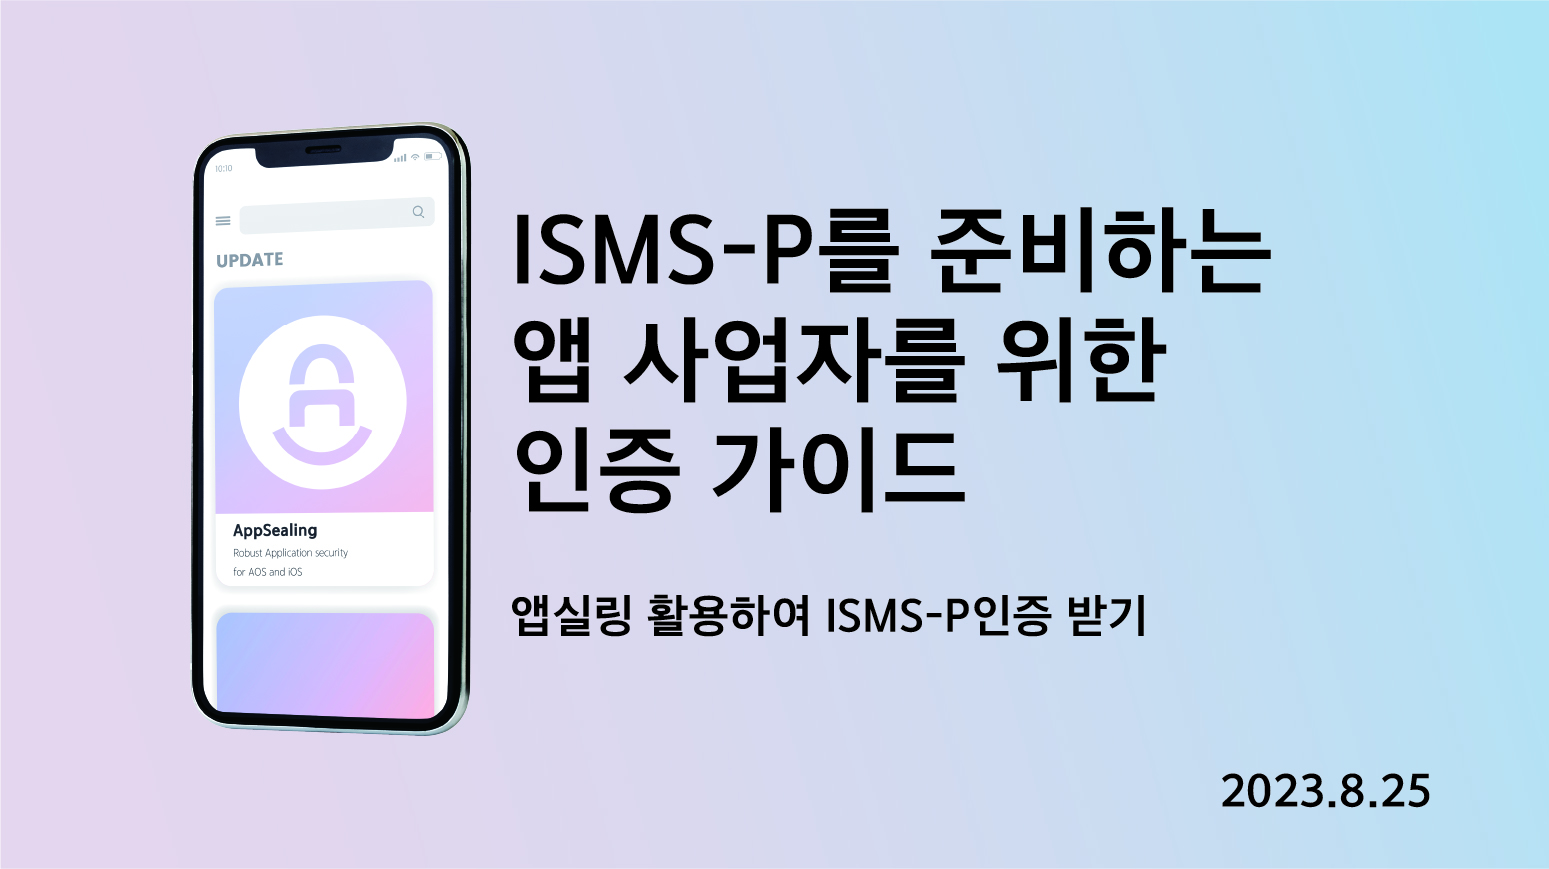 ISMS-P를 준비하는 앱 사업자를 위한 가이드